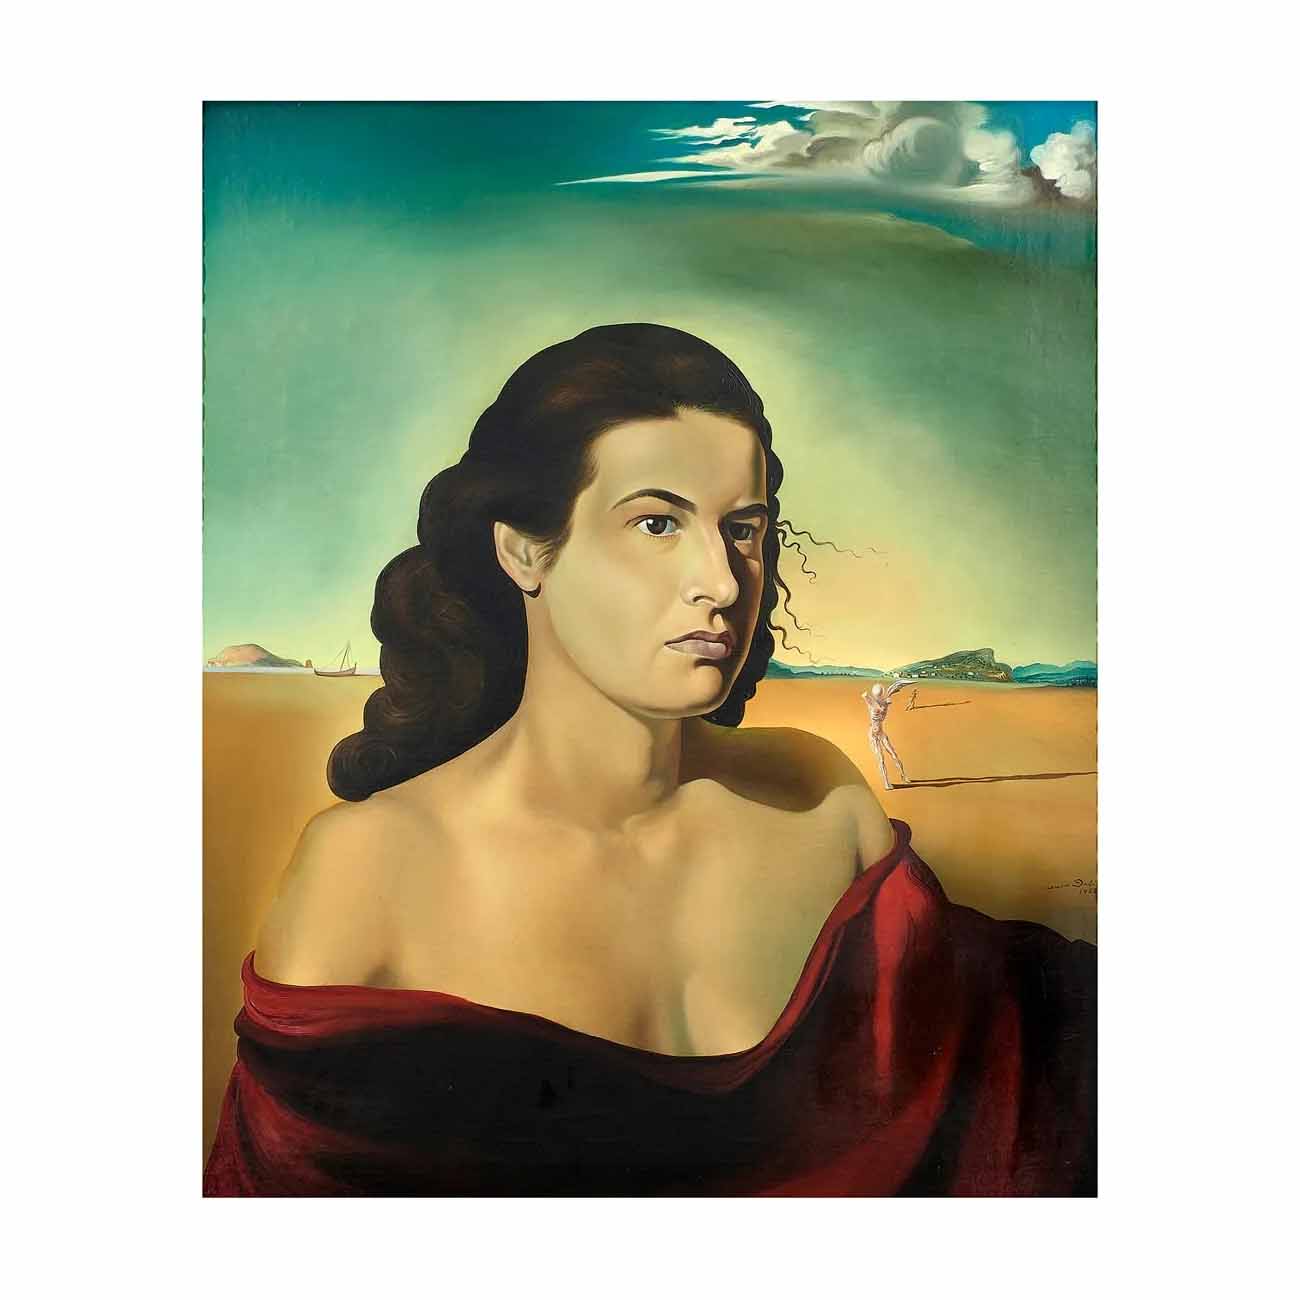 Portrait by Salvador Dali makes its auction debut June 20 at Clars